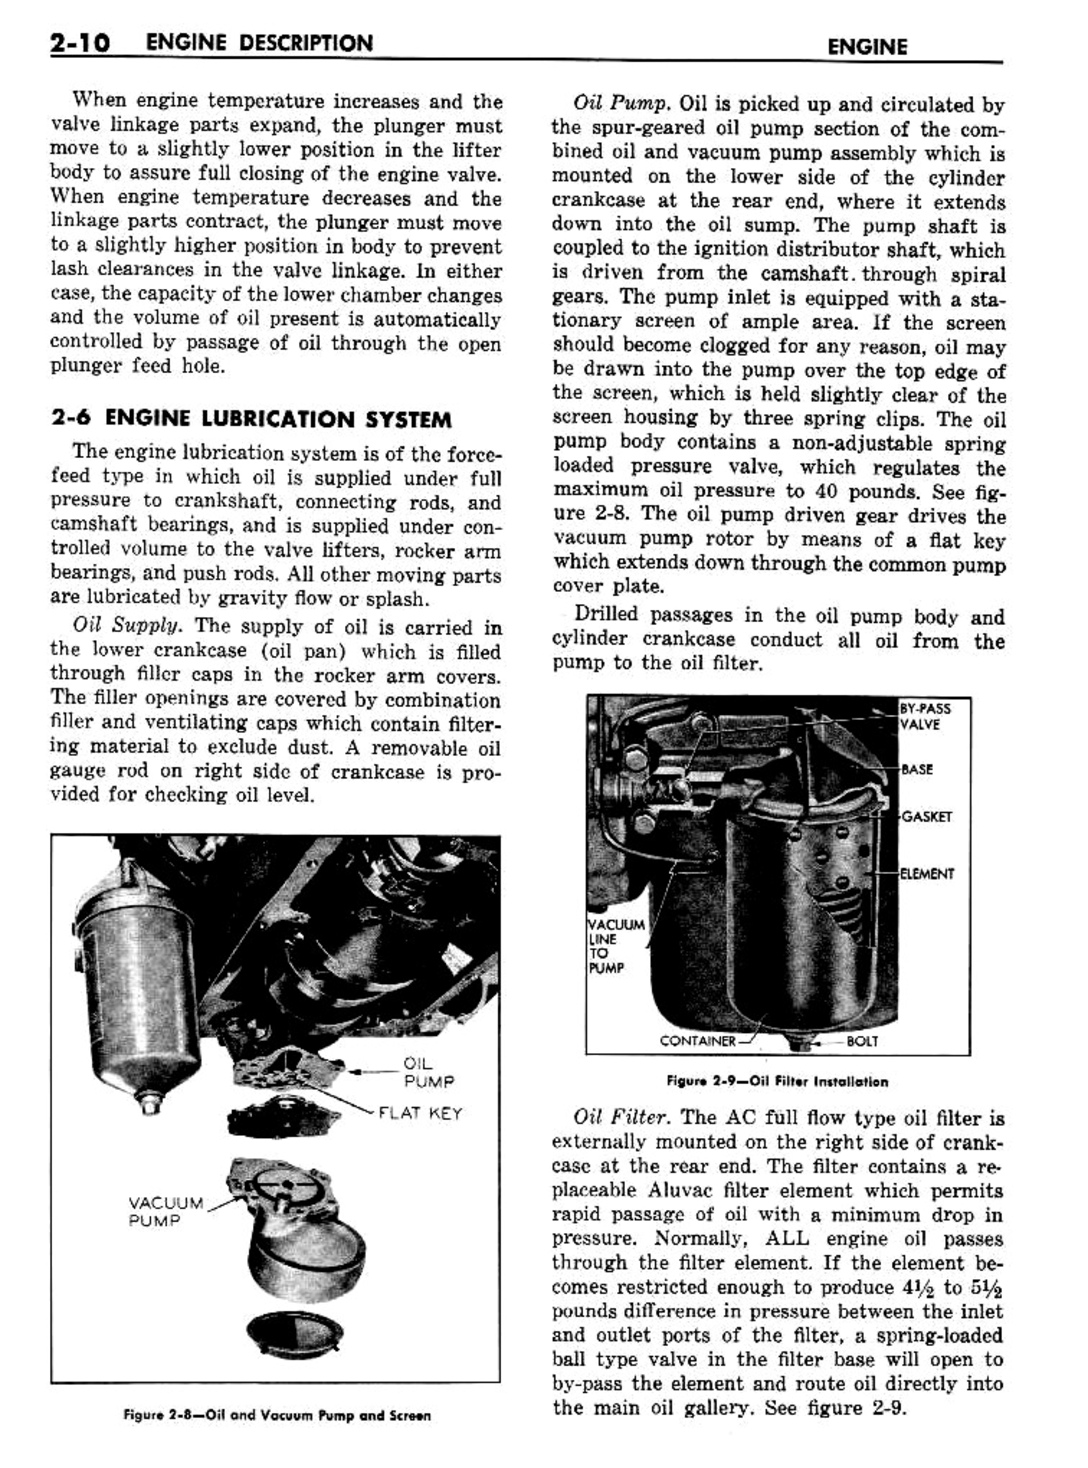 n_03 1957 Buick Shop Manual - Engine-010-010.jpg